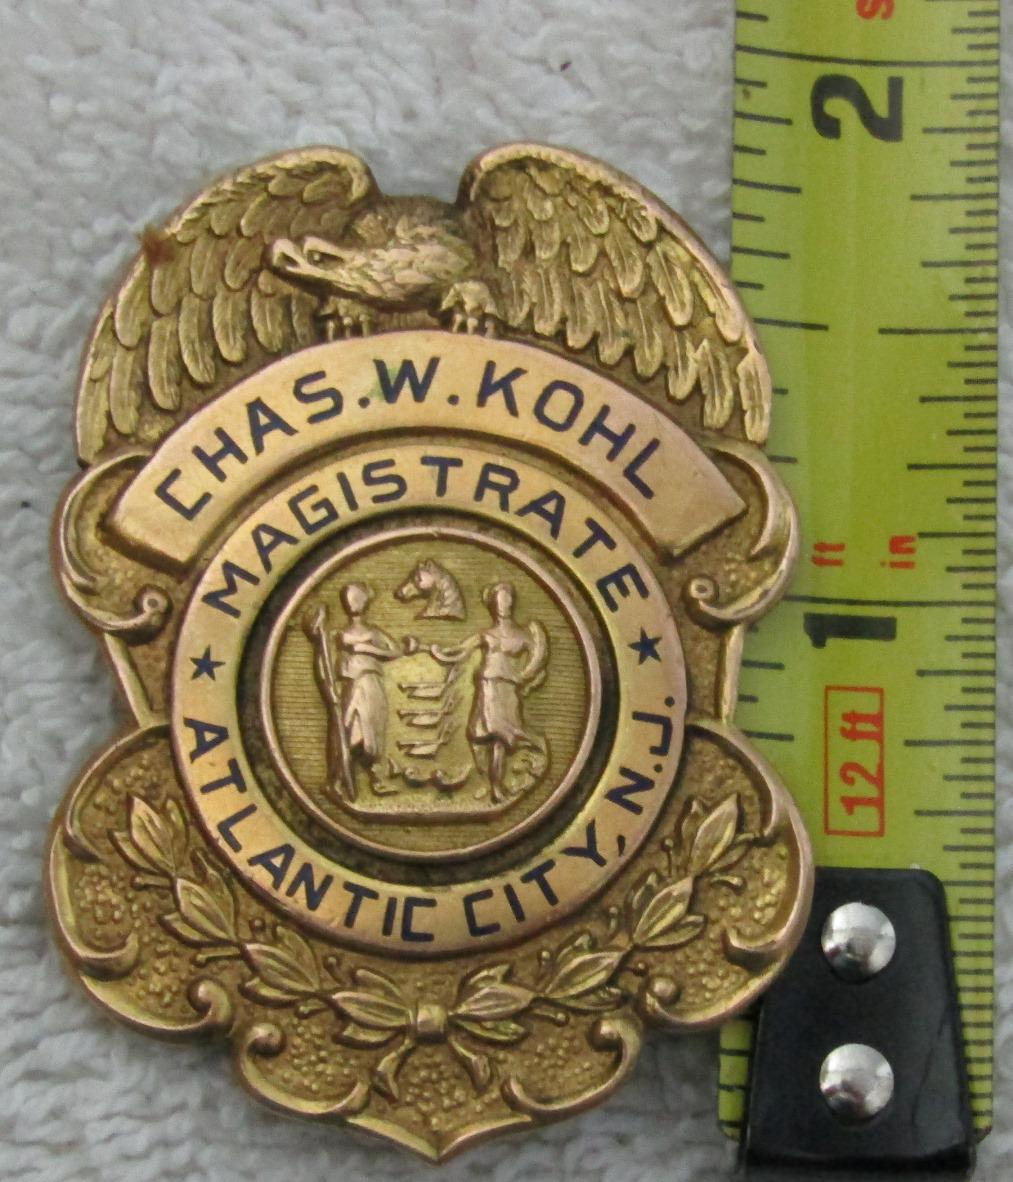 1930-40's Vintage  "ATLANTIC CITY, NJ. MAGISTRATE" Badge-named-Chas. W. Kohl